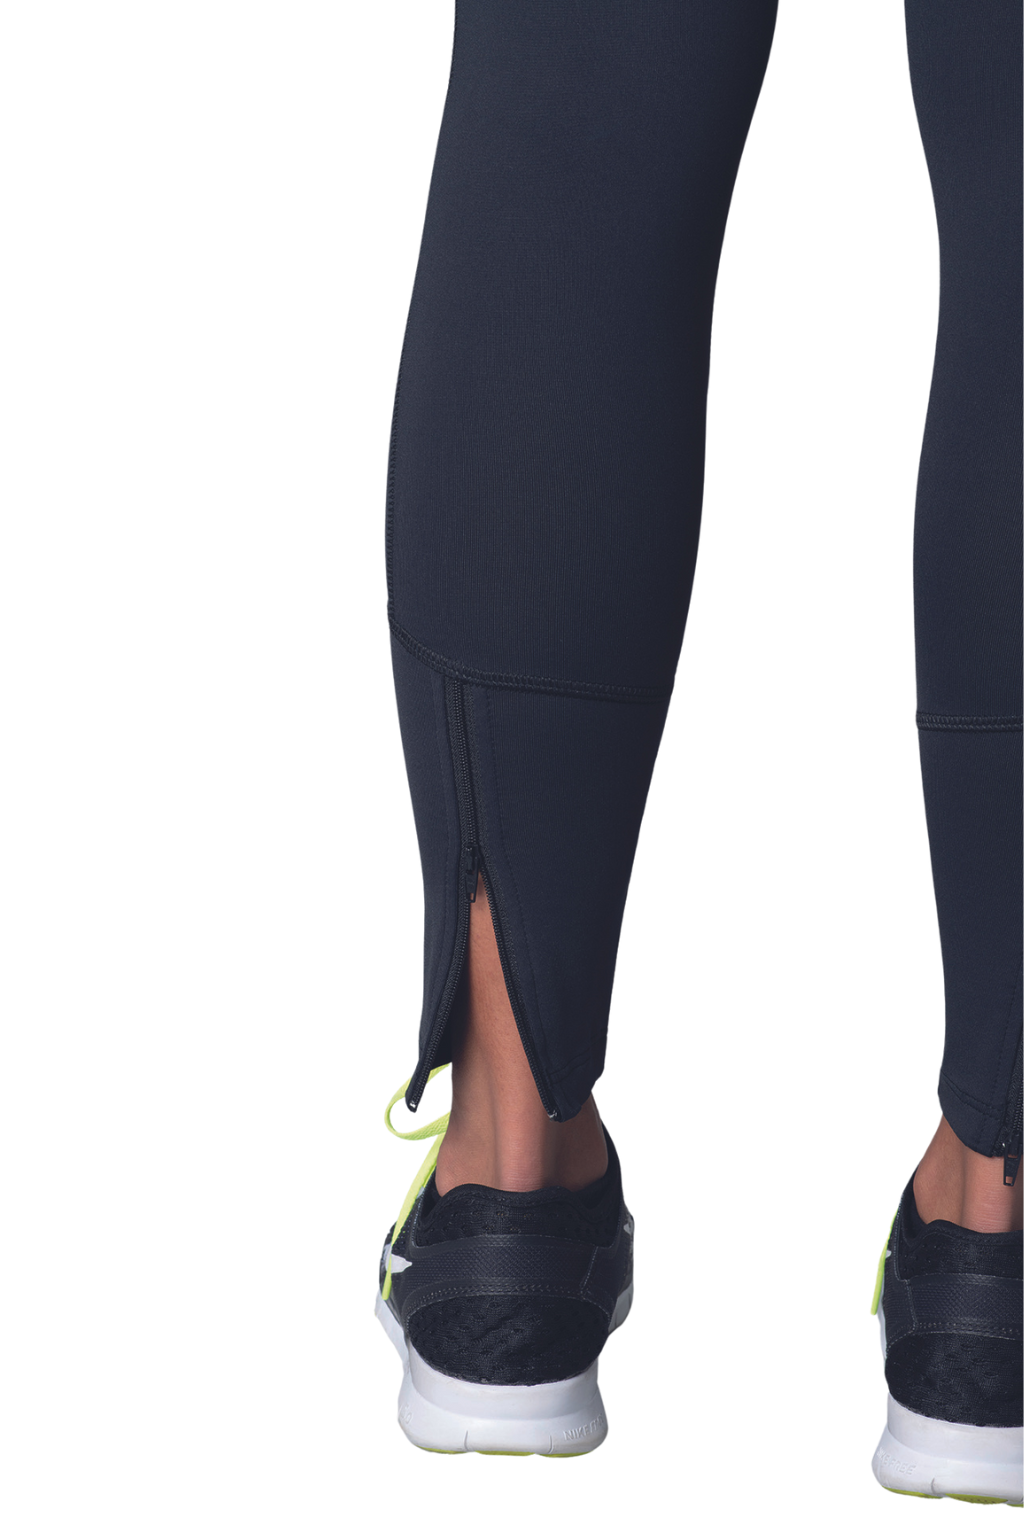 Lupo Sport Thermal X Run Women's Legging Pants